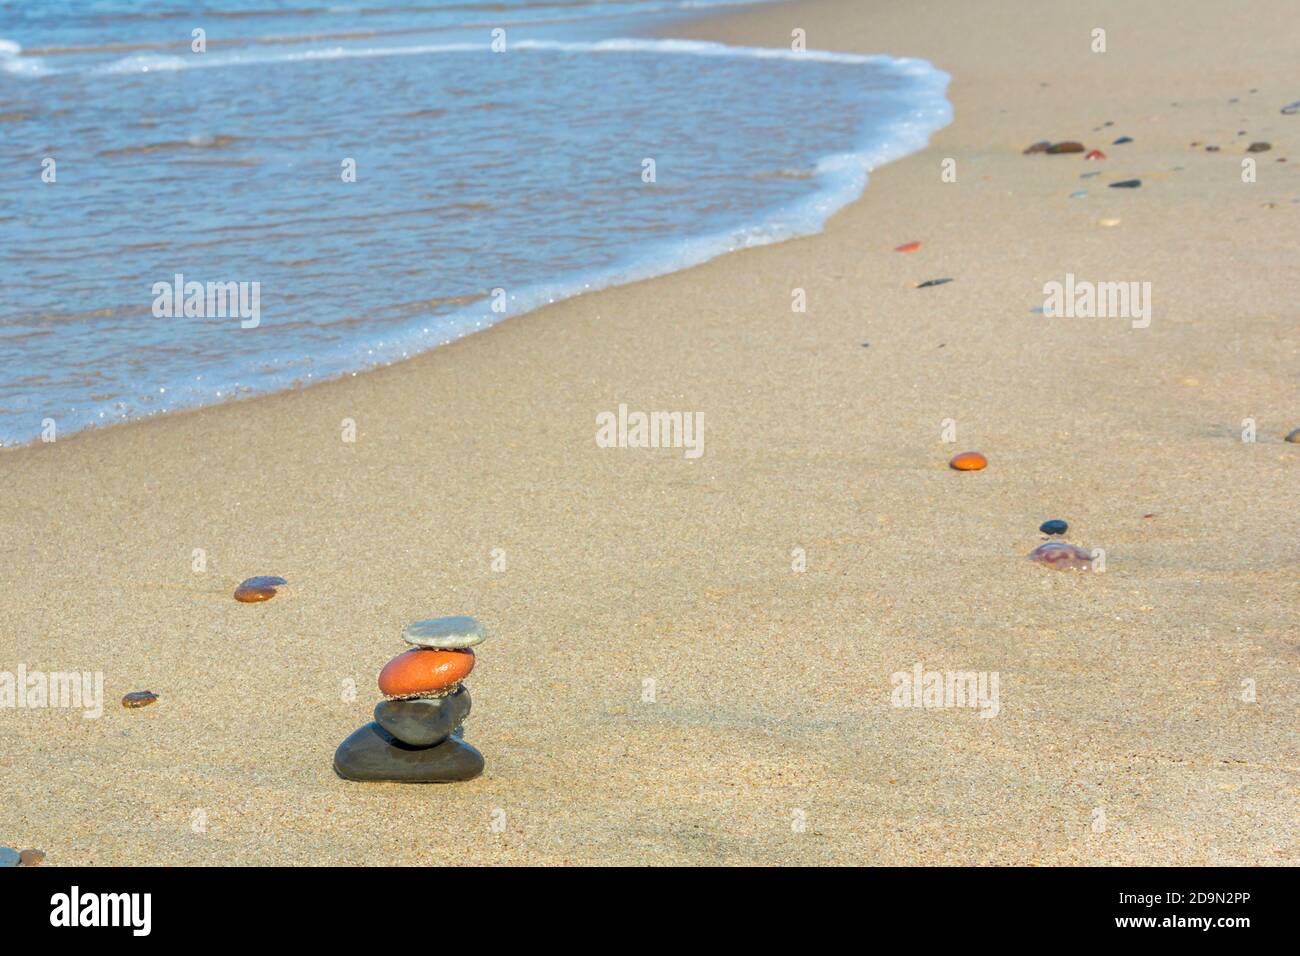 Pyramid of stones on seashore. Sandy beach sea water. Harmony and meditation concept. Copy space, selective focus. Stock Photo